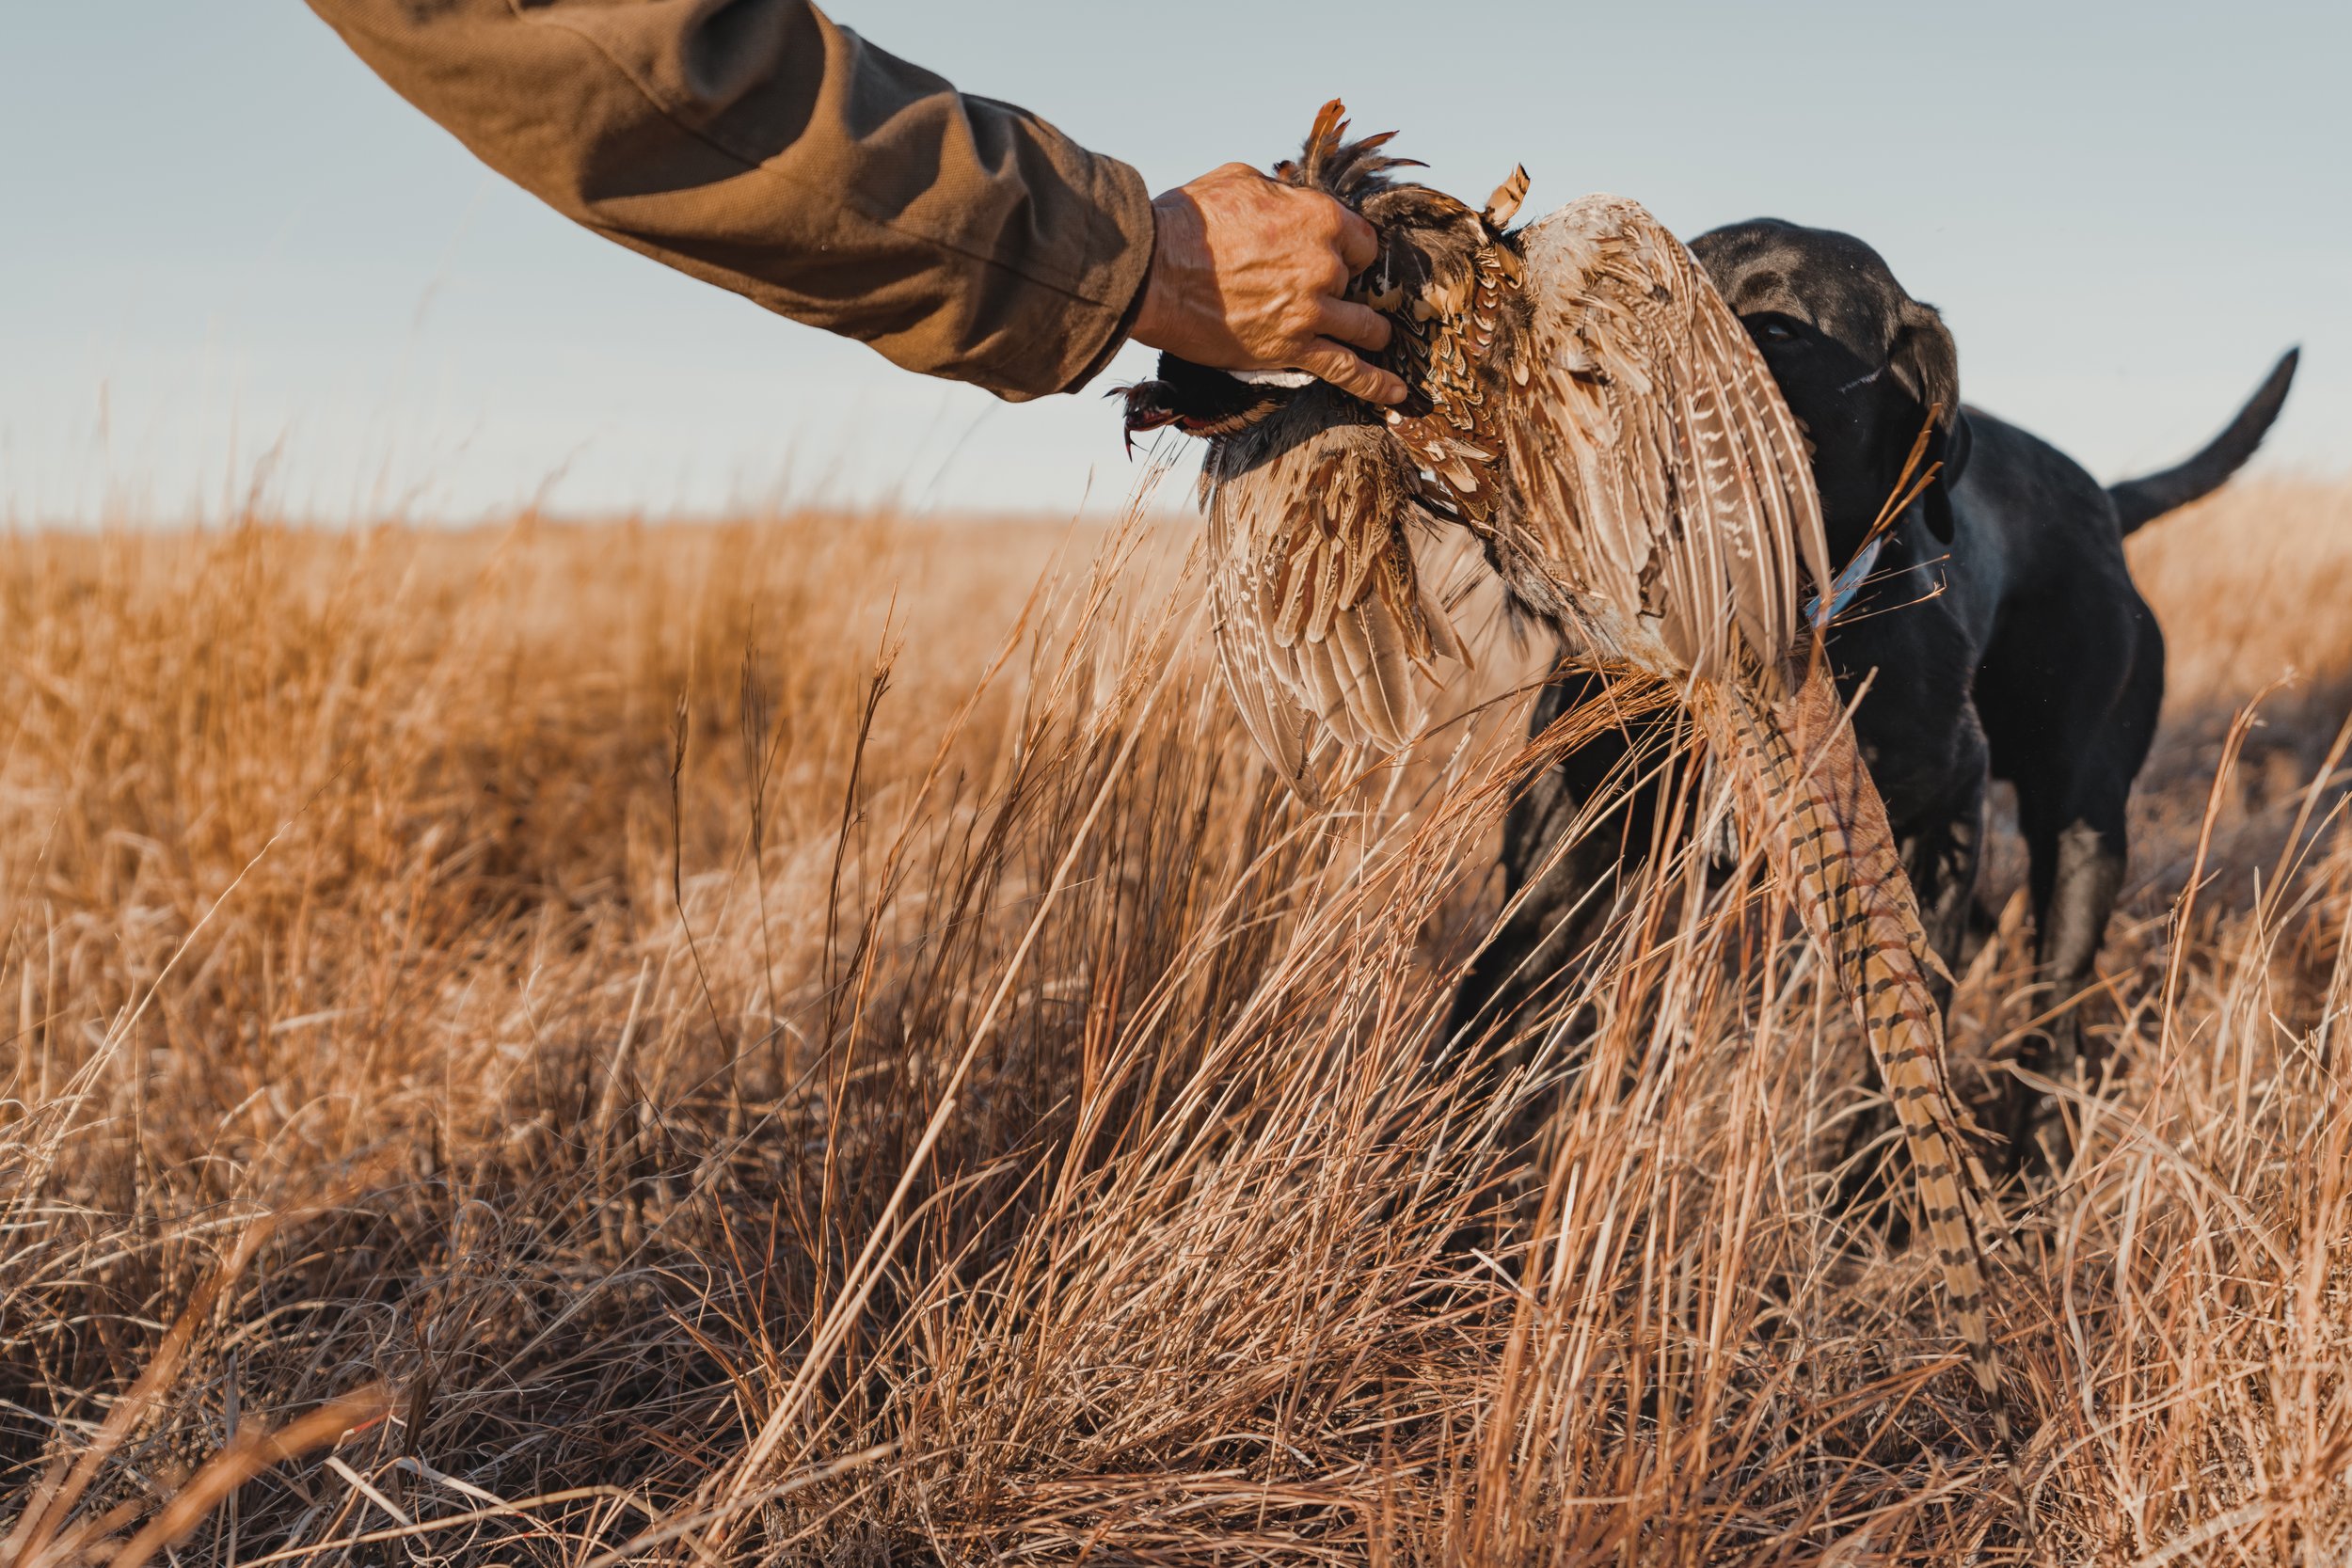 A black lab brings a retrieved pheasant to the hunter's hand